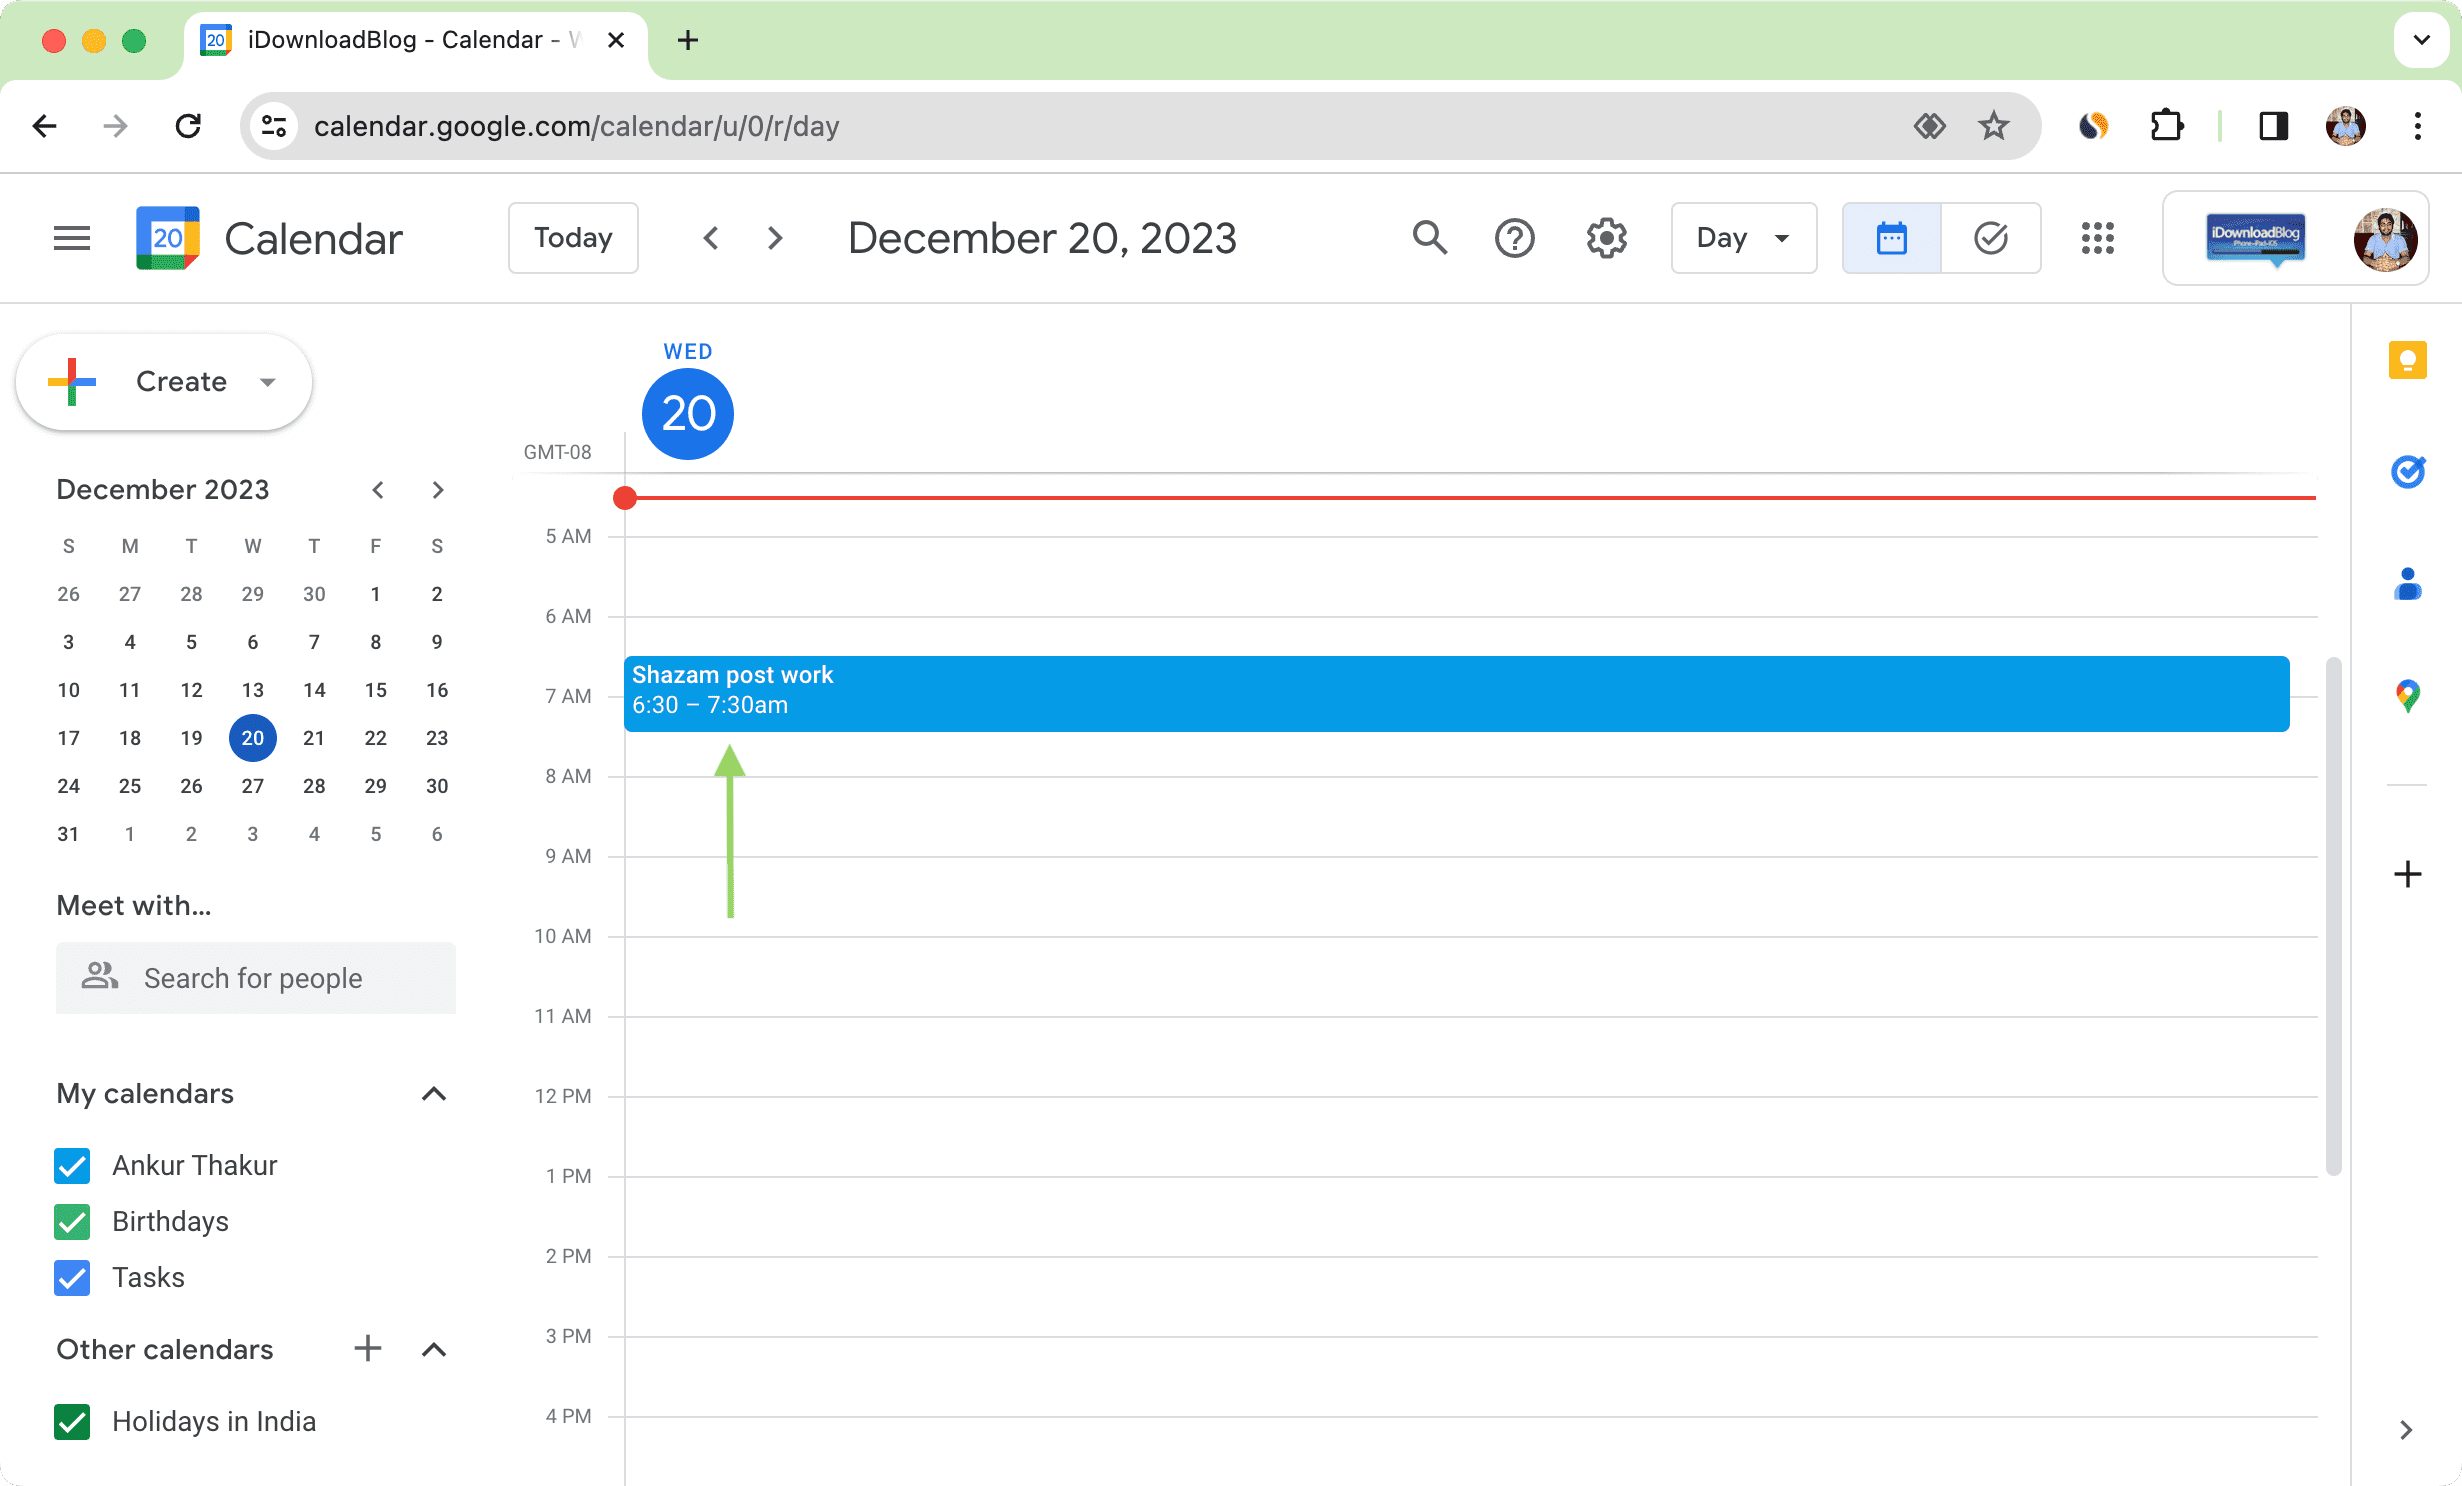 Apple Calendar app event synced to Google Calendar